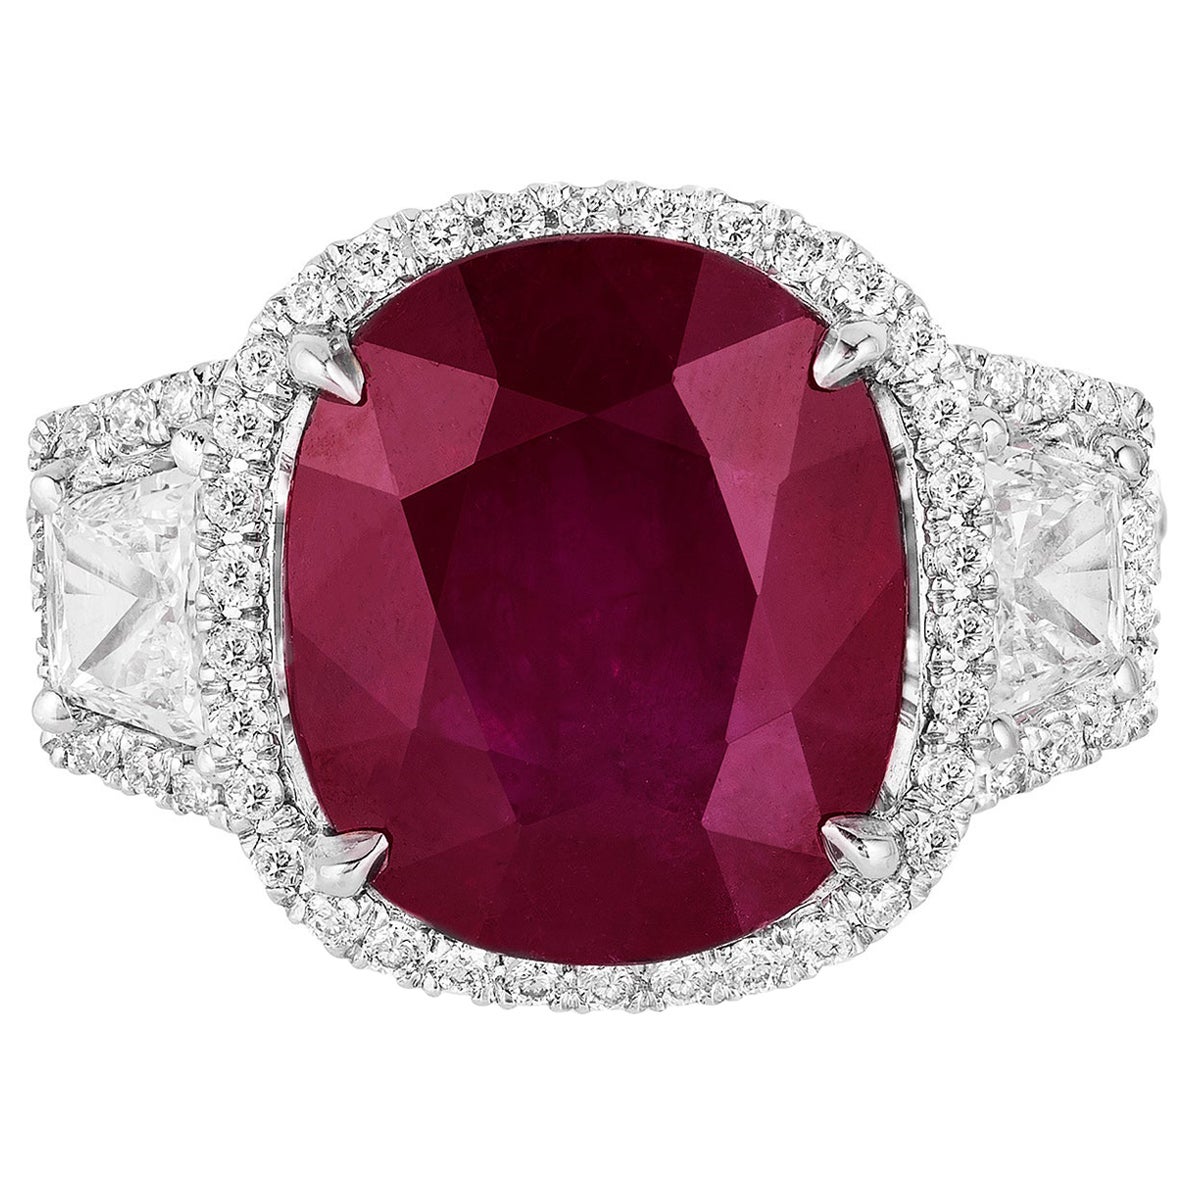 Andreoli 7.37 Carat Burma Ruby Diamond 18 Karat White Gold Ring CDC Certified For Sale